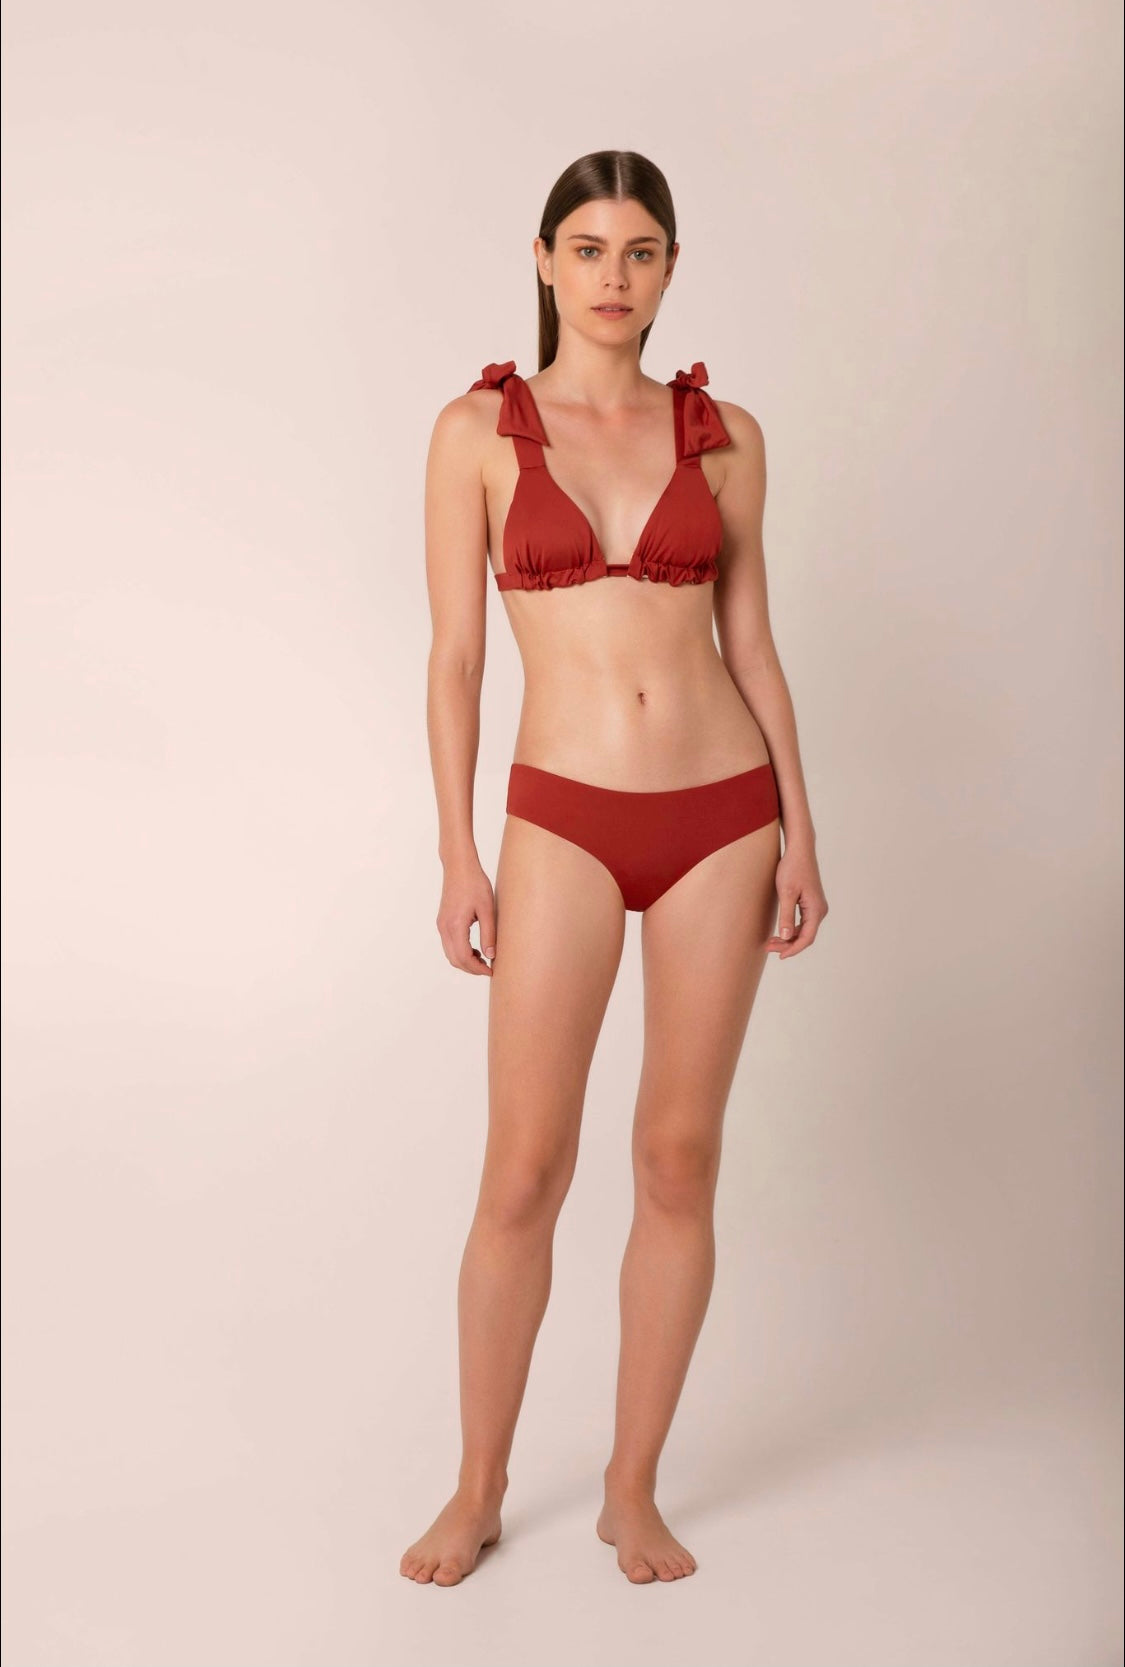 Red bikini bottom